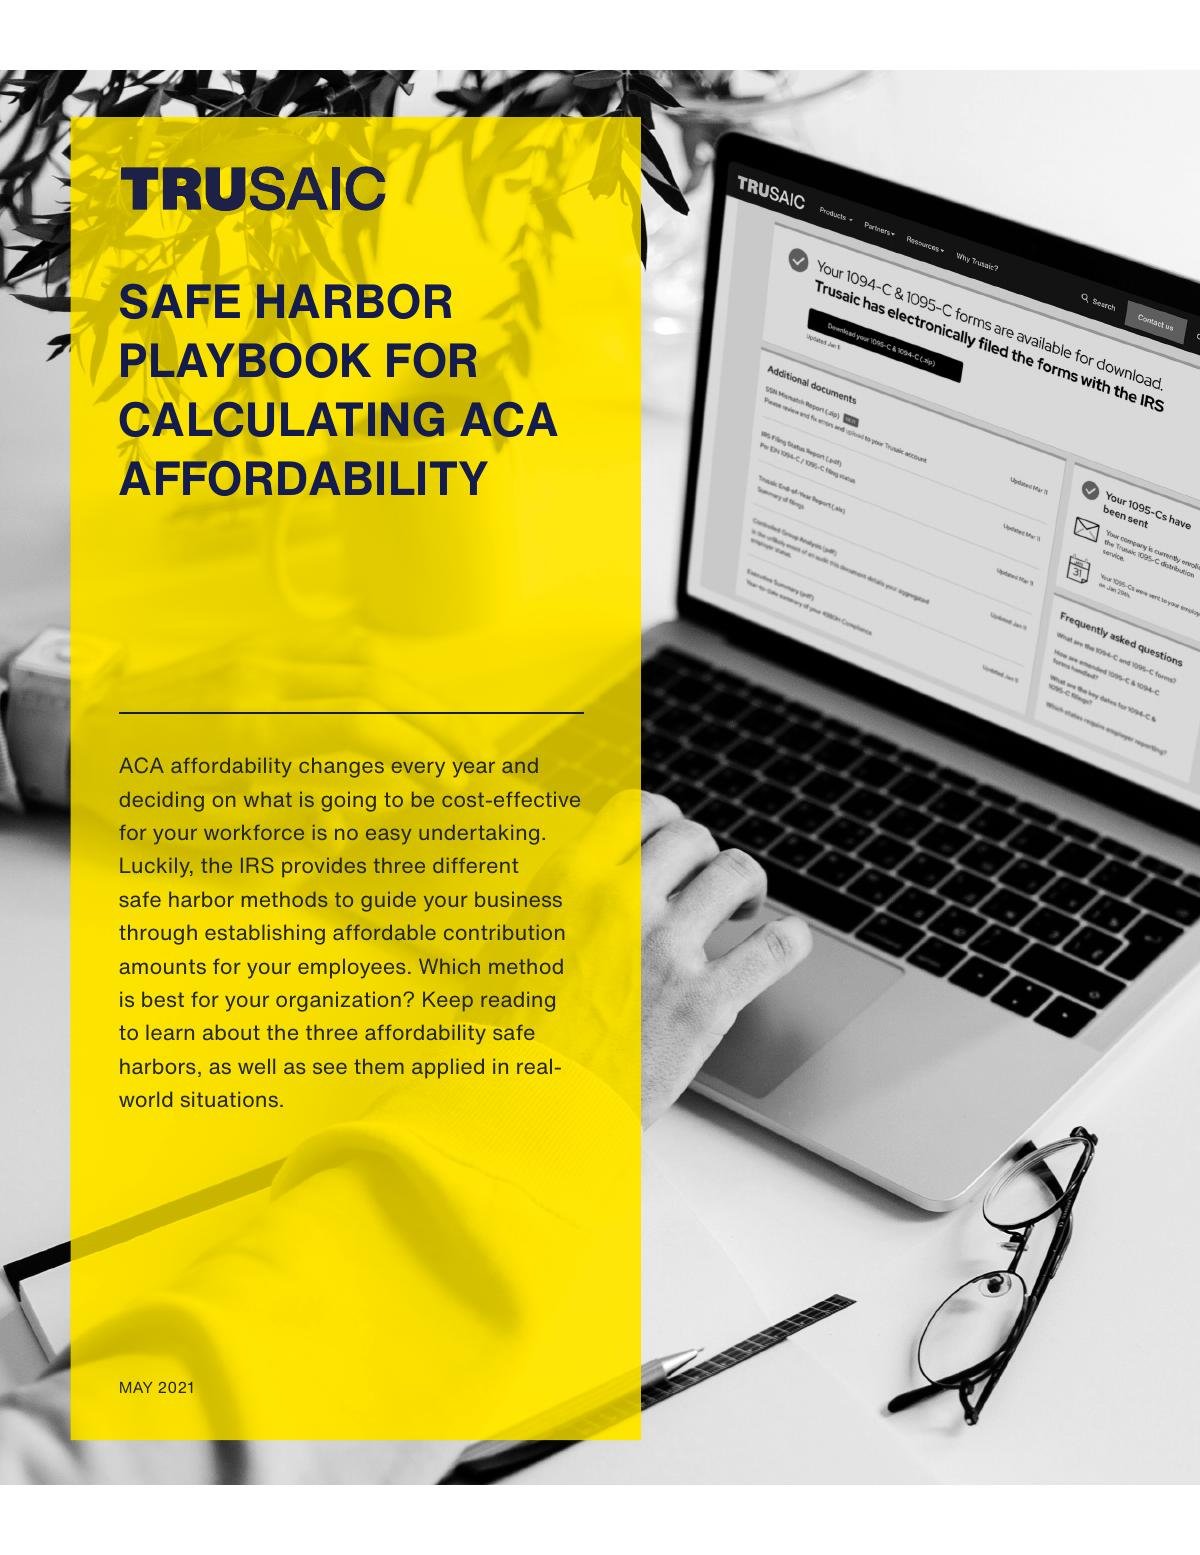 Safe Harbor Playbook for Calculating ACA Affordability